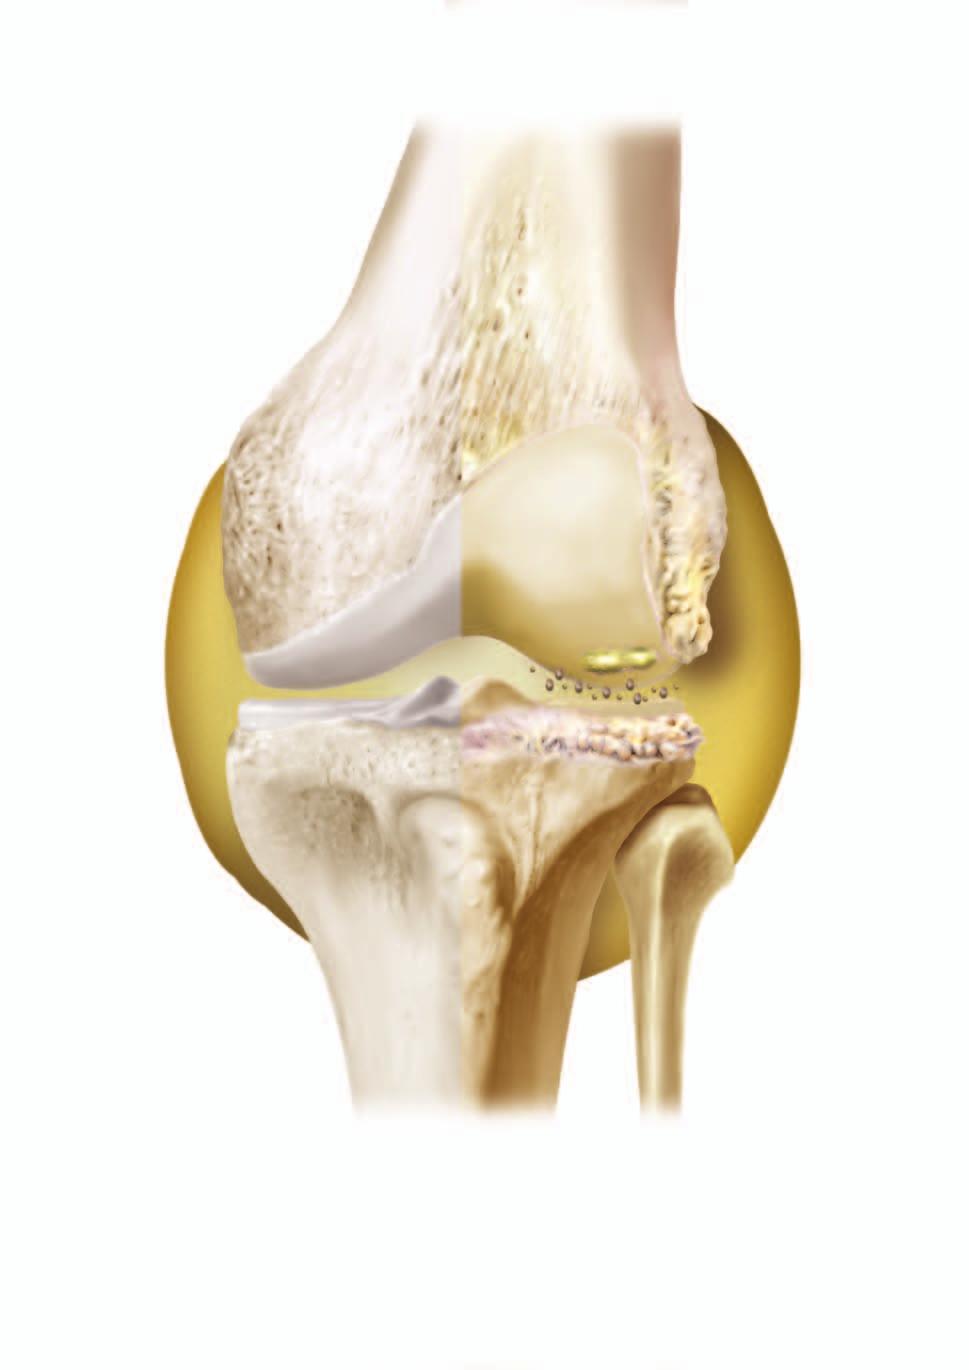 Normal knee vs OA knee: What s different inside?